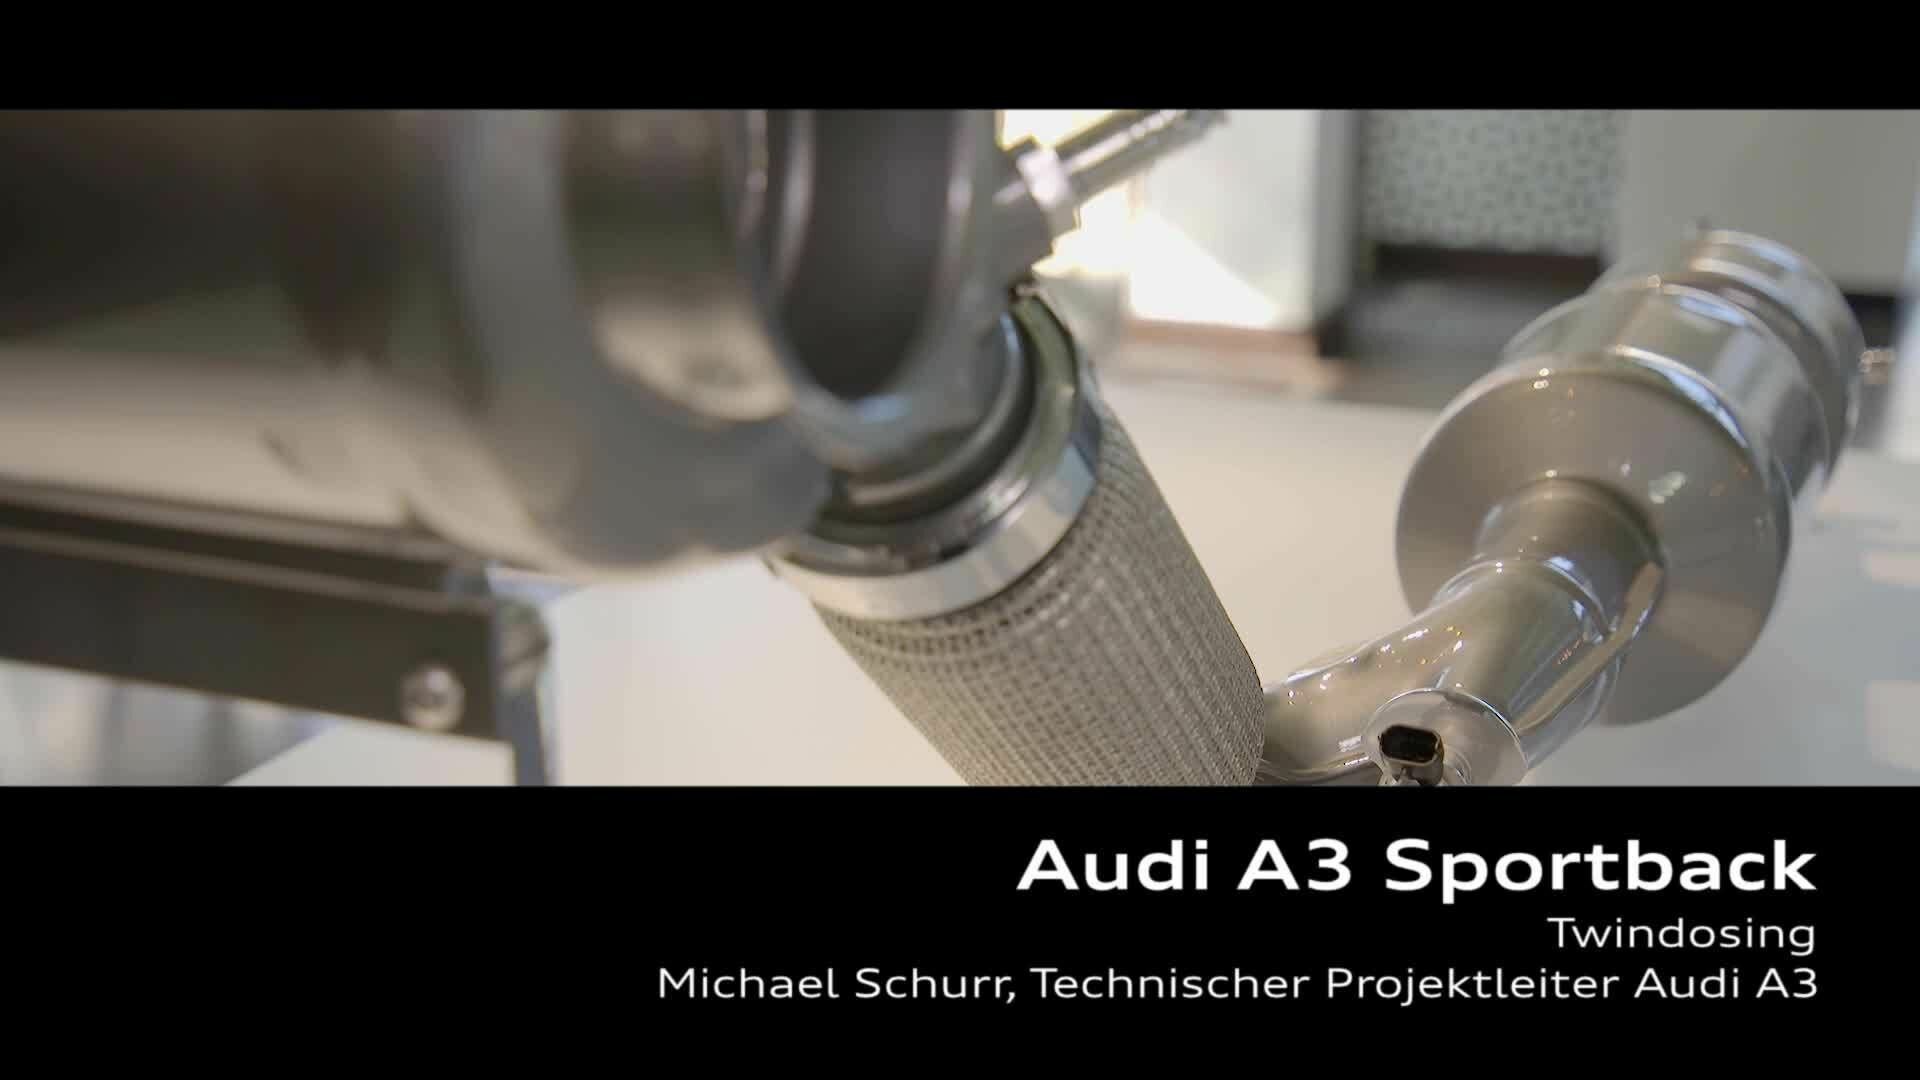 Footage: Audi A3 Sportback – Twindosing